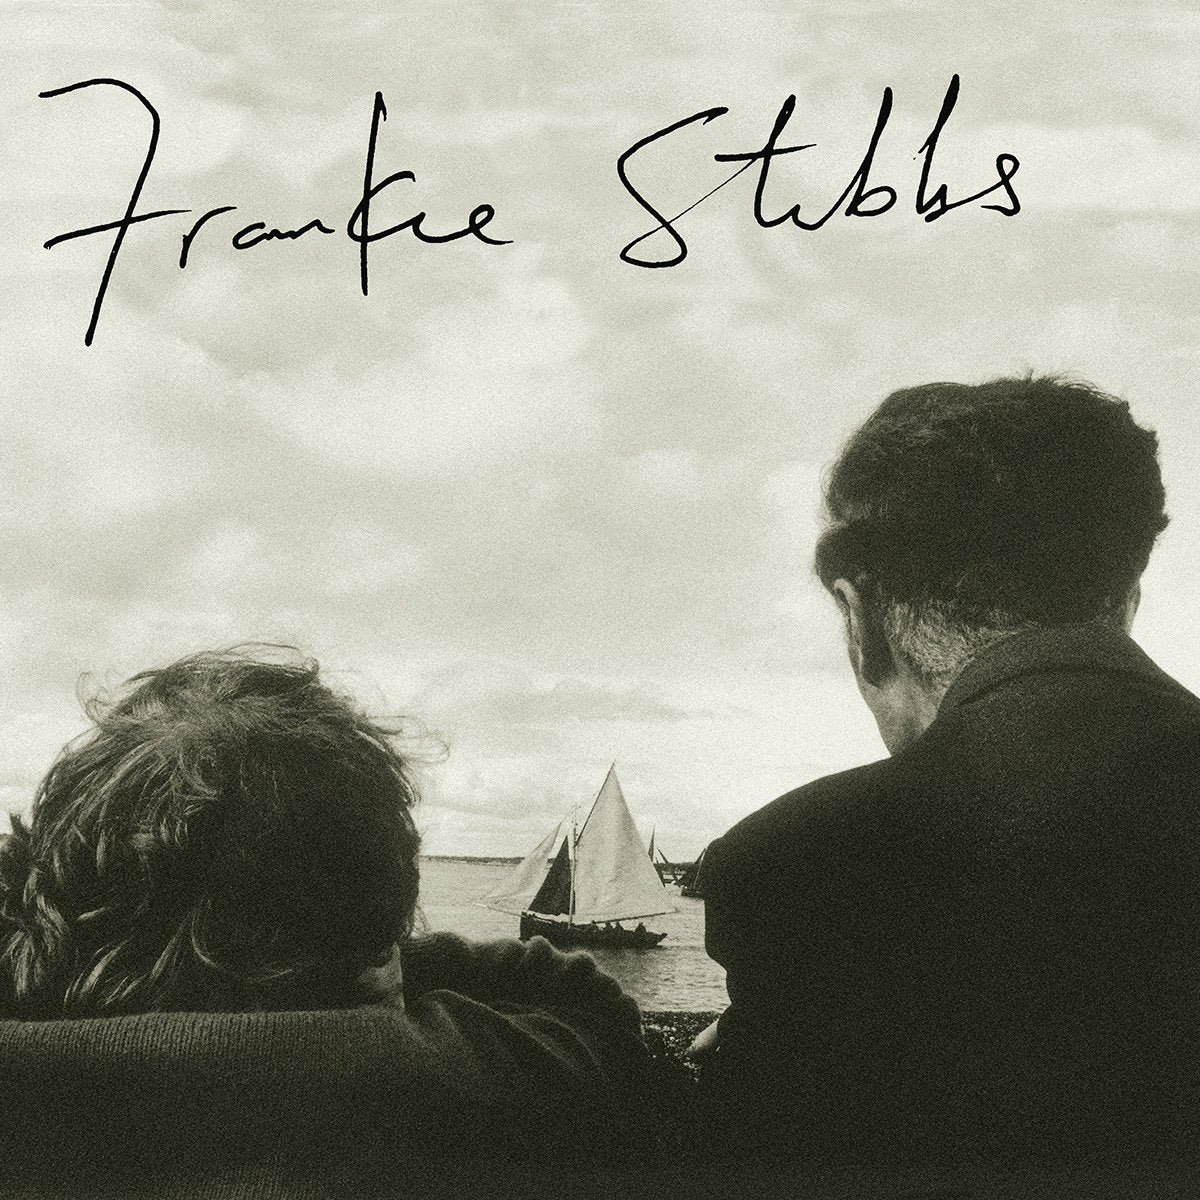 Frankie Stubbs - s/t 10" - Vinyl - Sounds of Subterrania